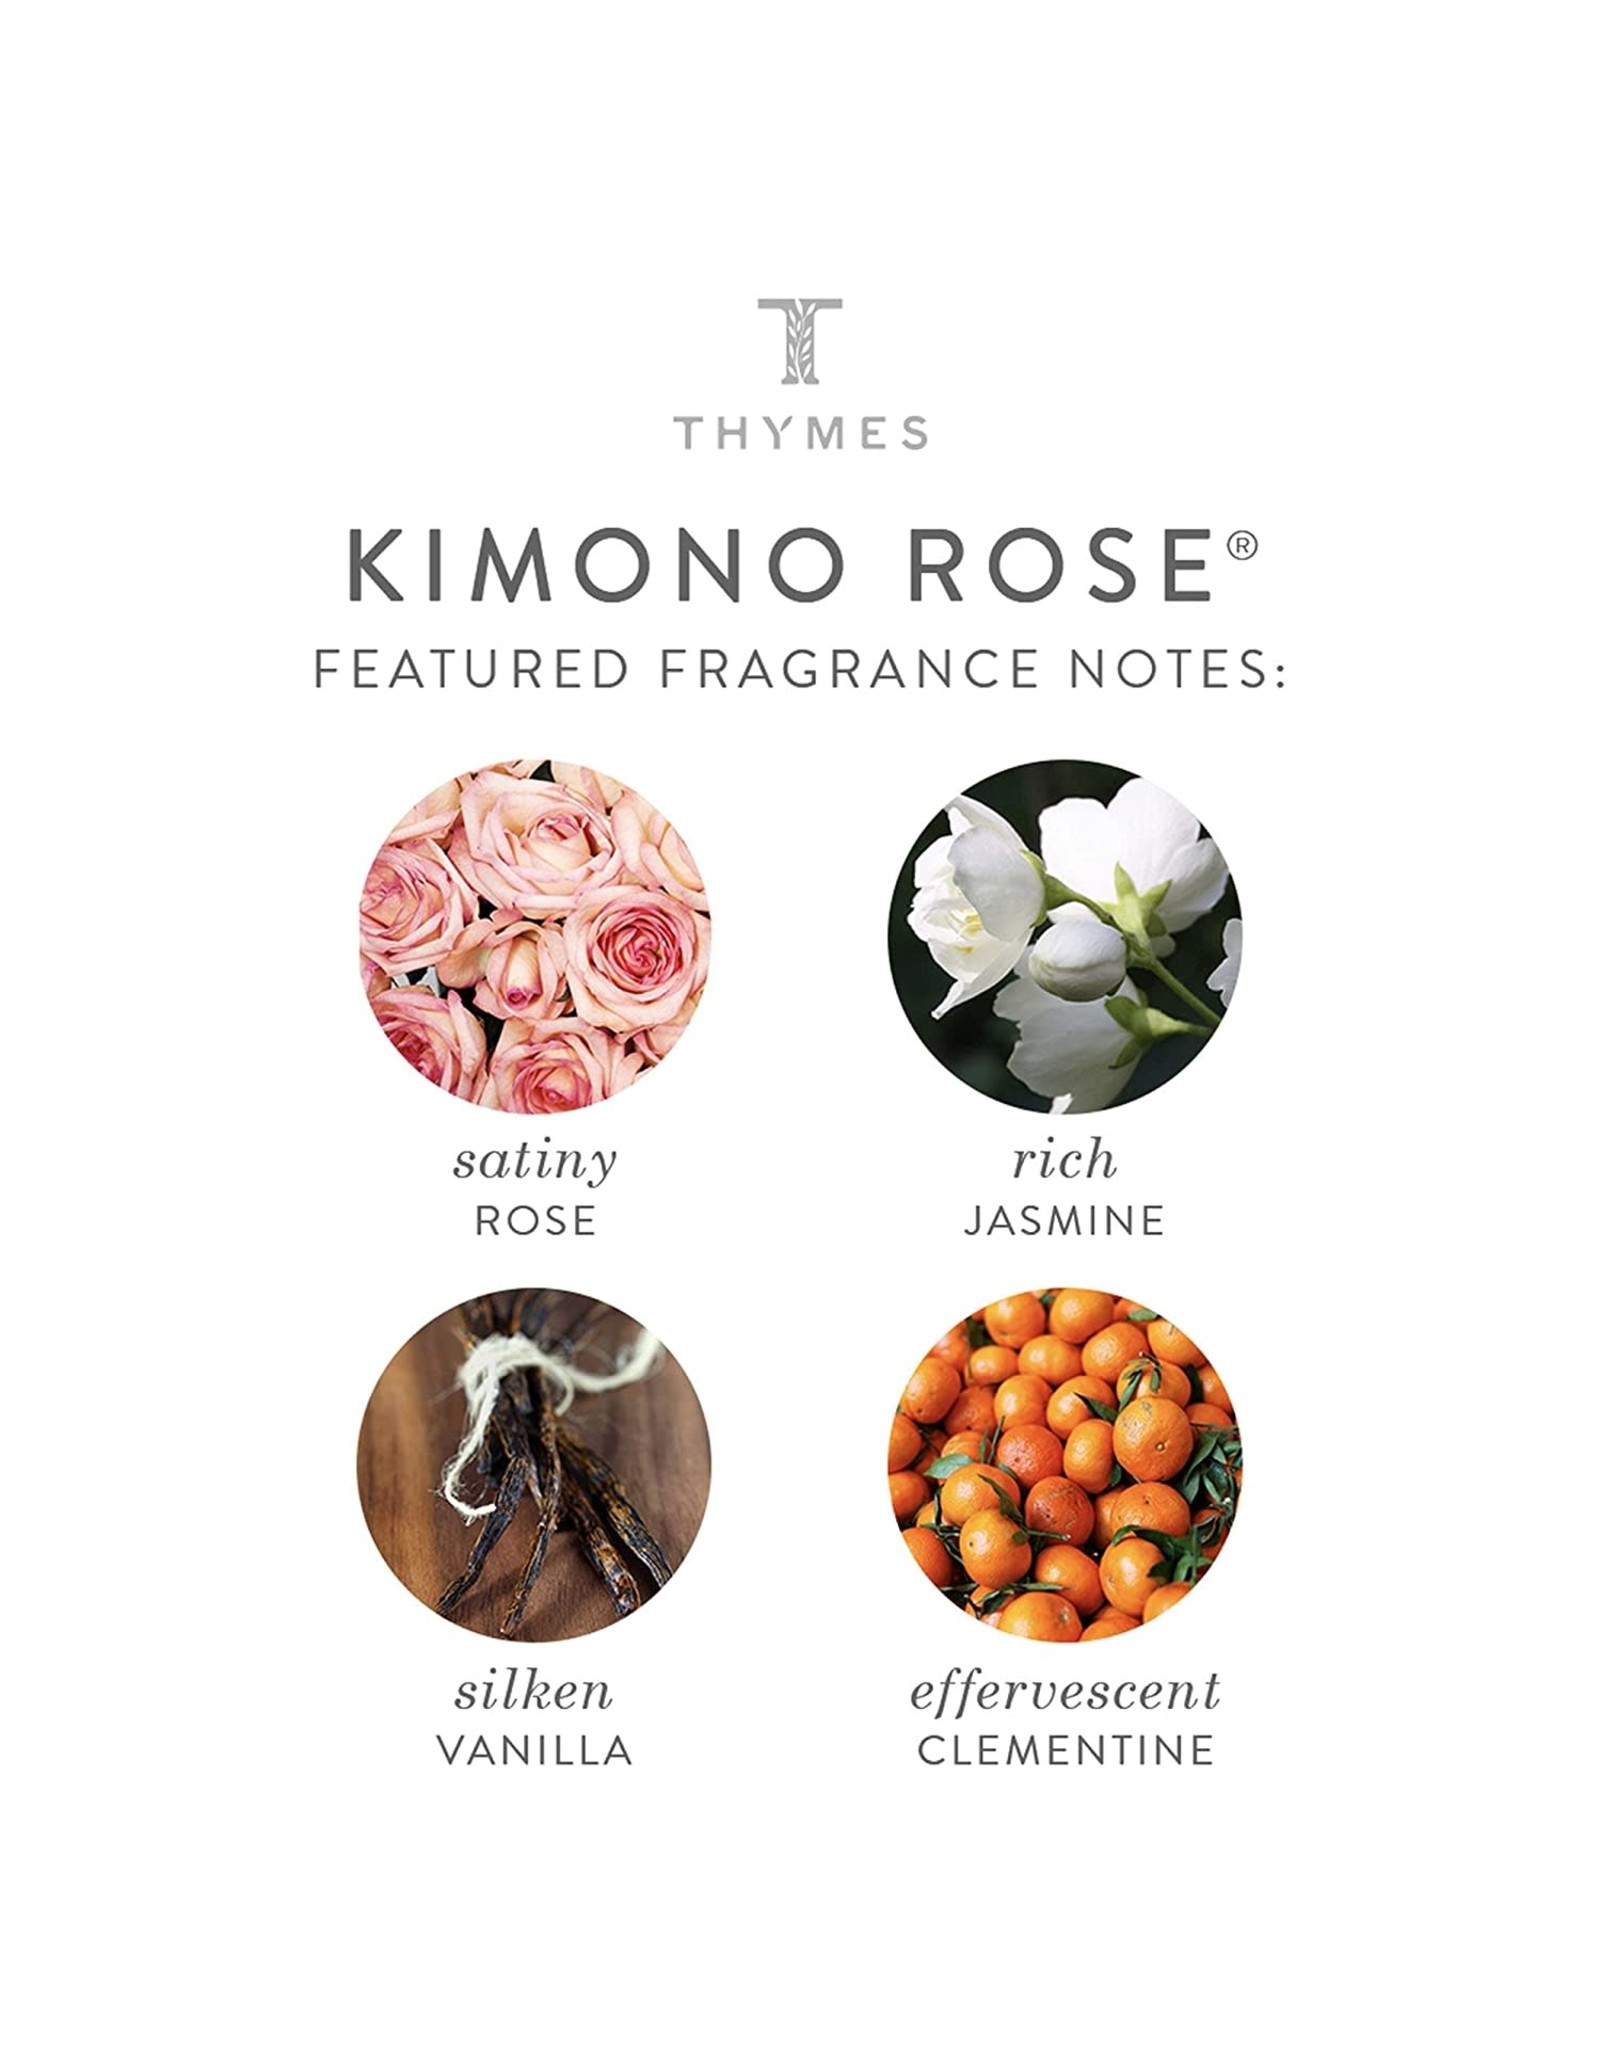 Kimono Rose Travel Set With Beauty Bag